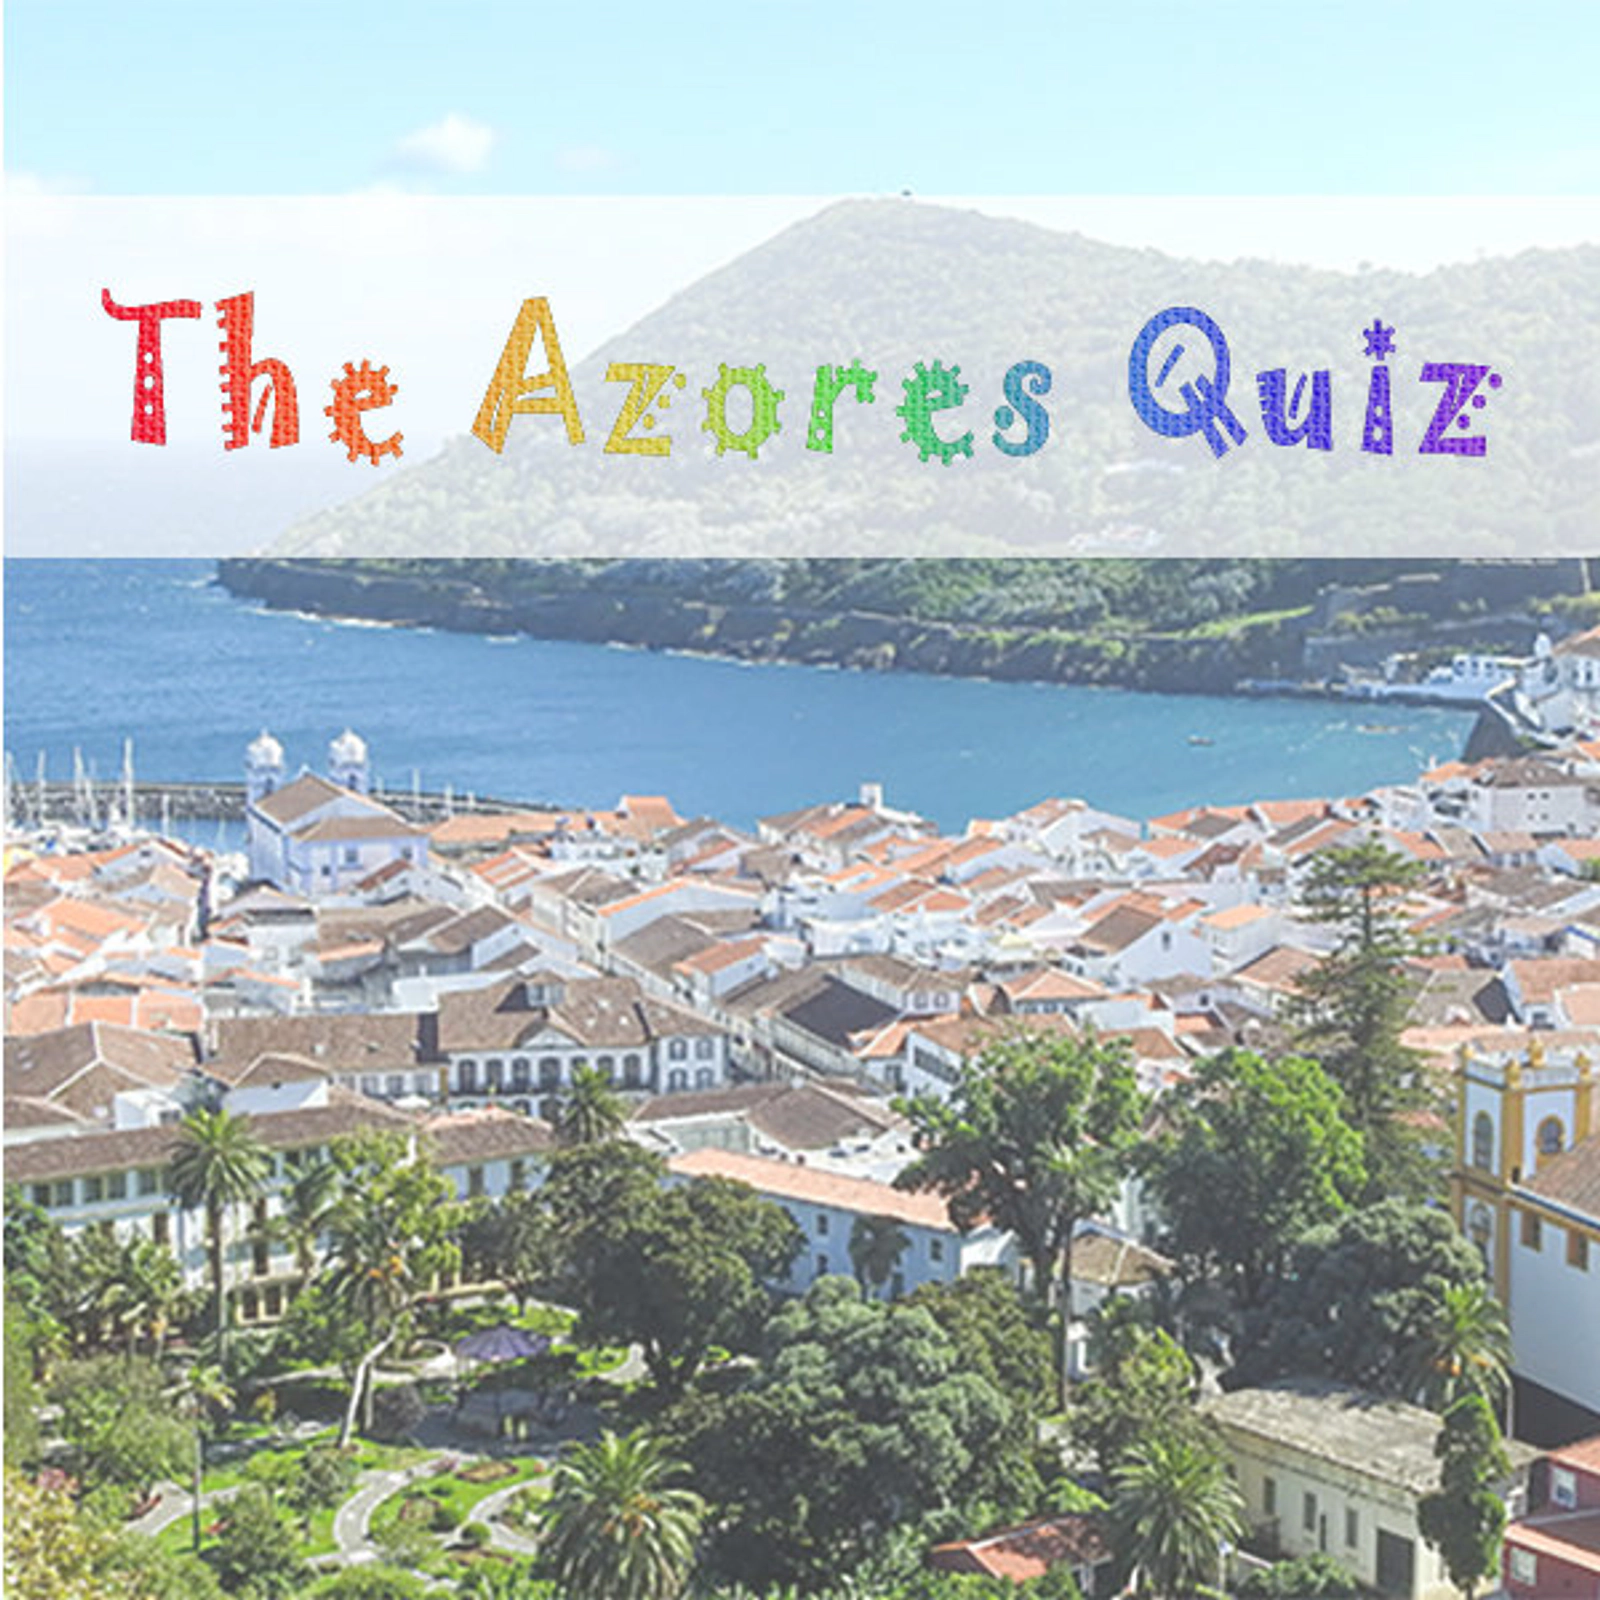 The Azores Quiz